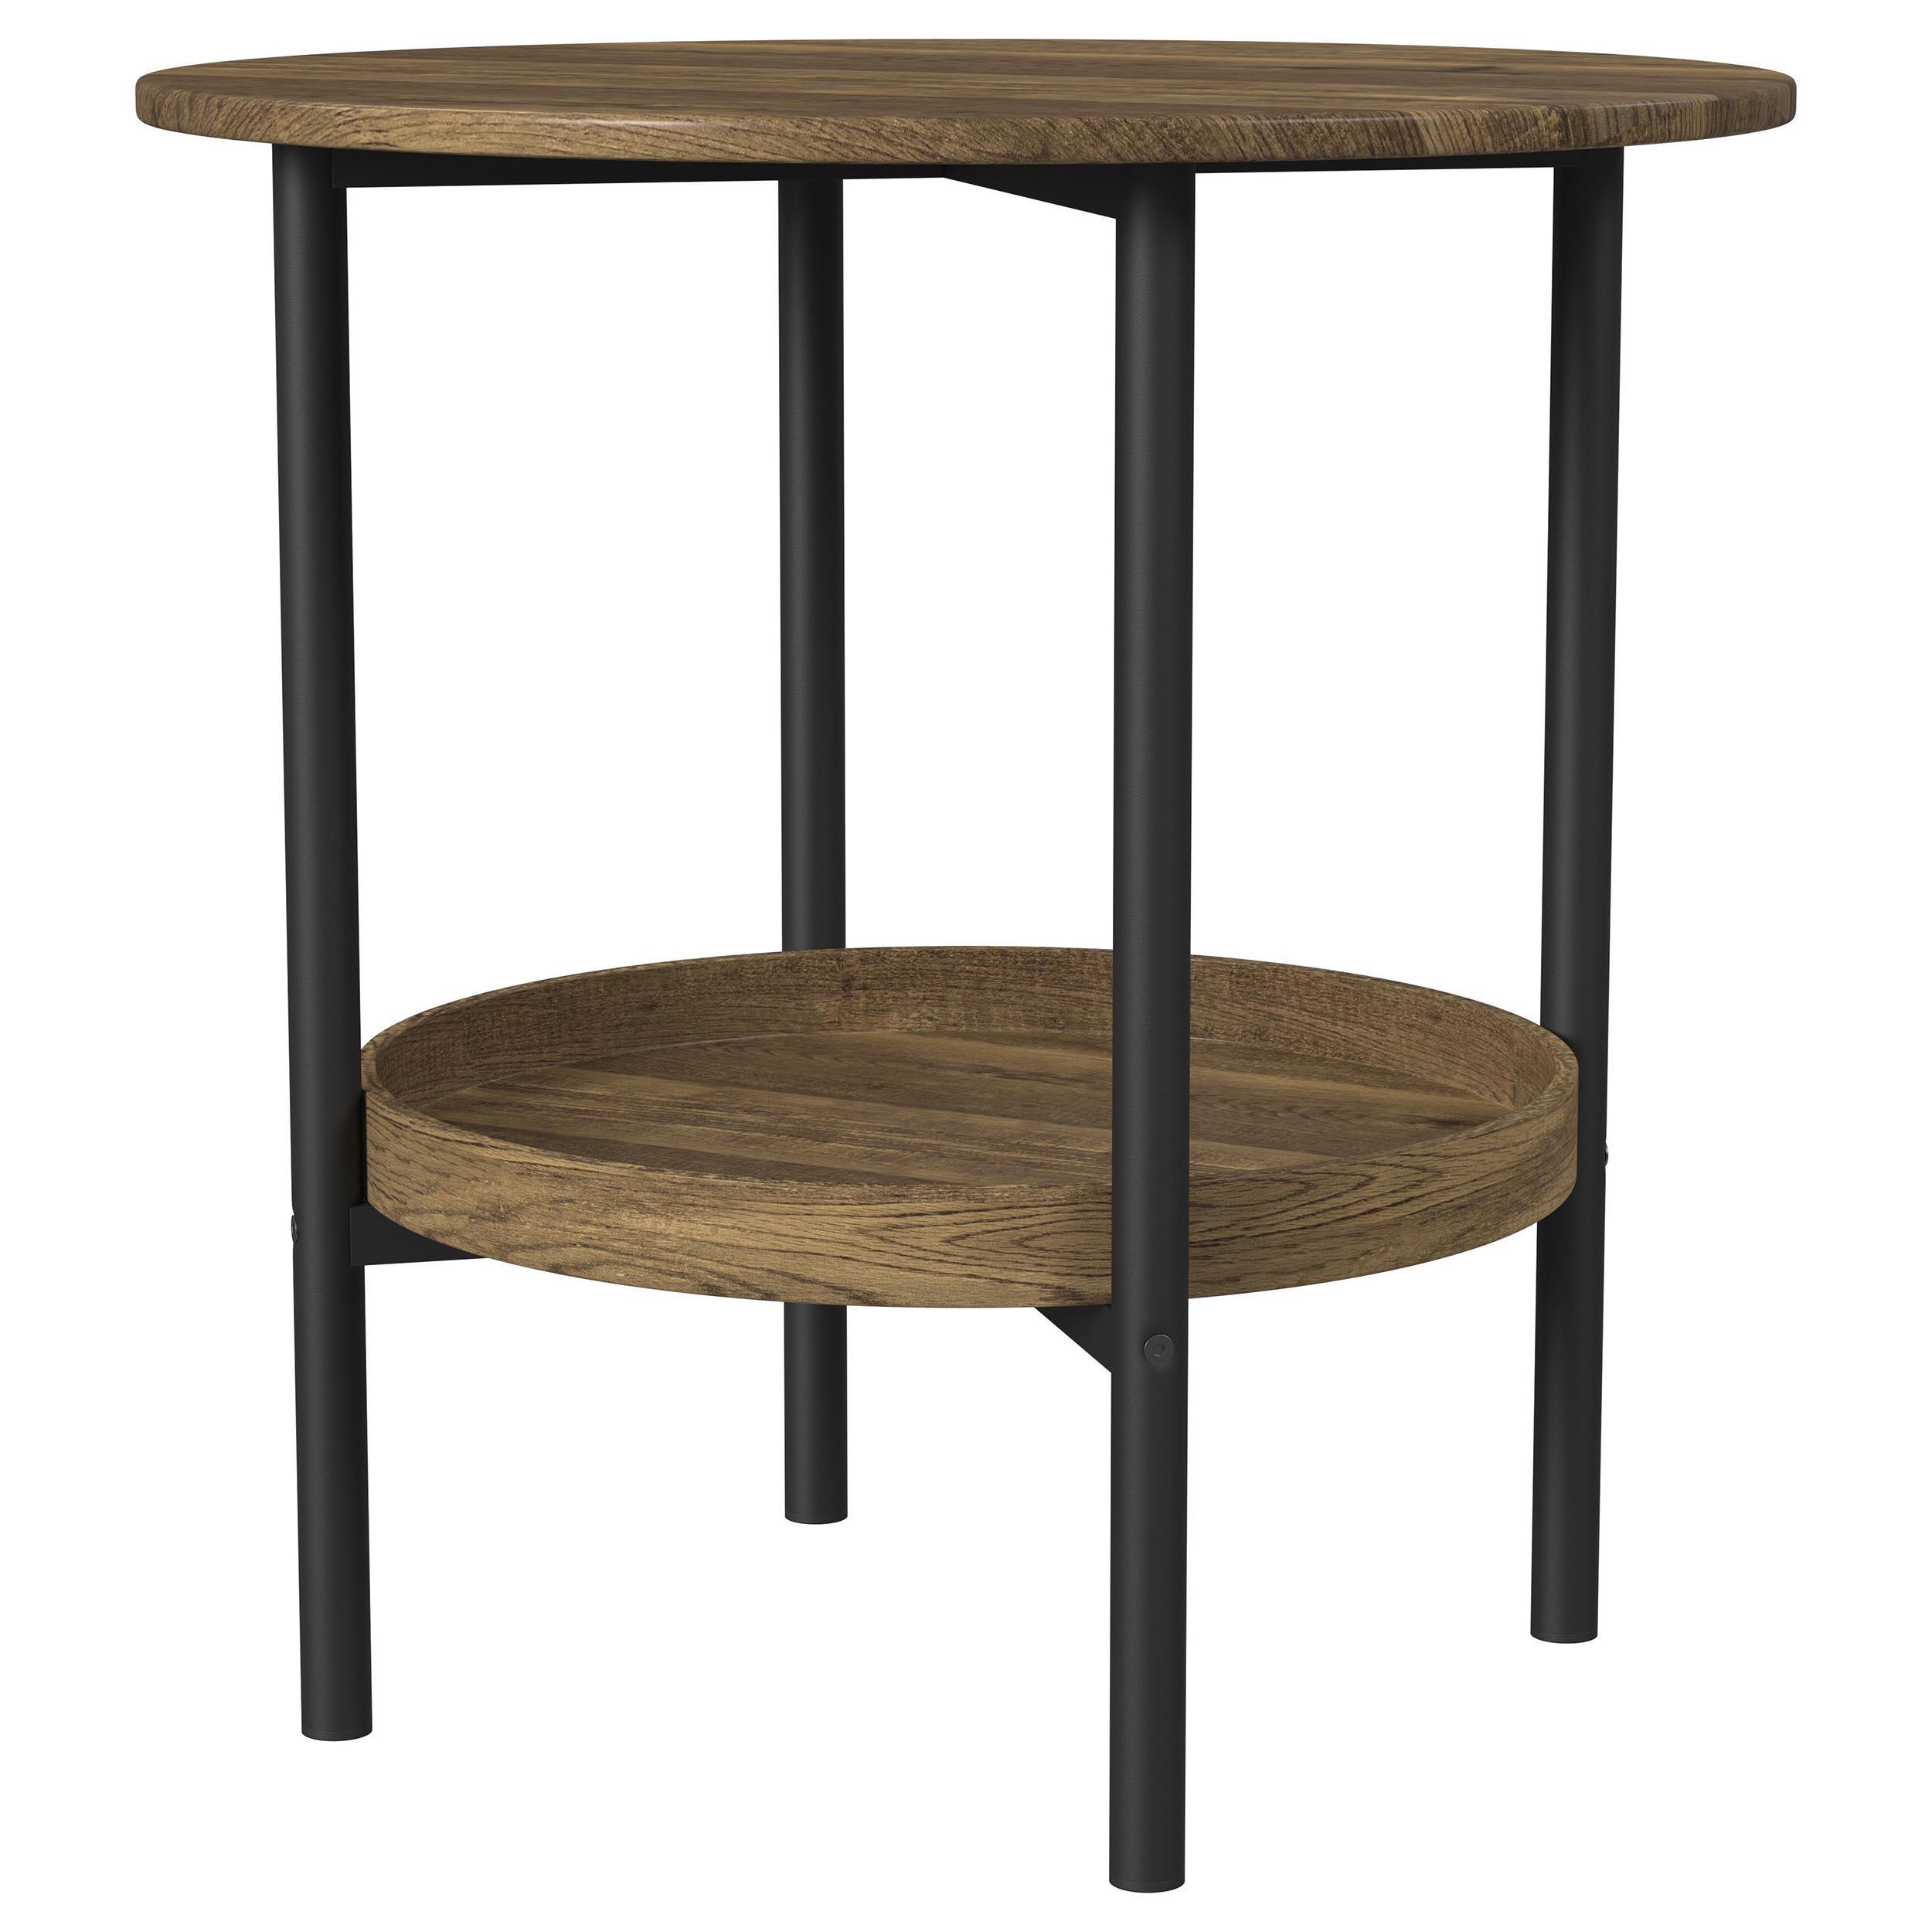 Coaster Fine Furniture - Delfin - Round Glass Top End Table With Shelf - Black / Brown - 5th Avenue Furniture